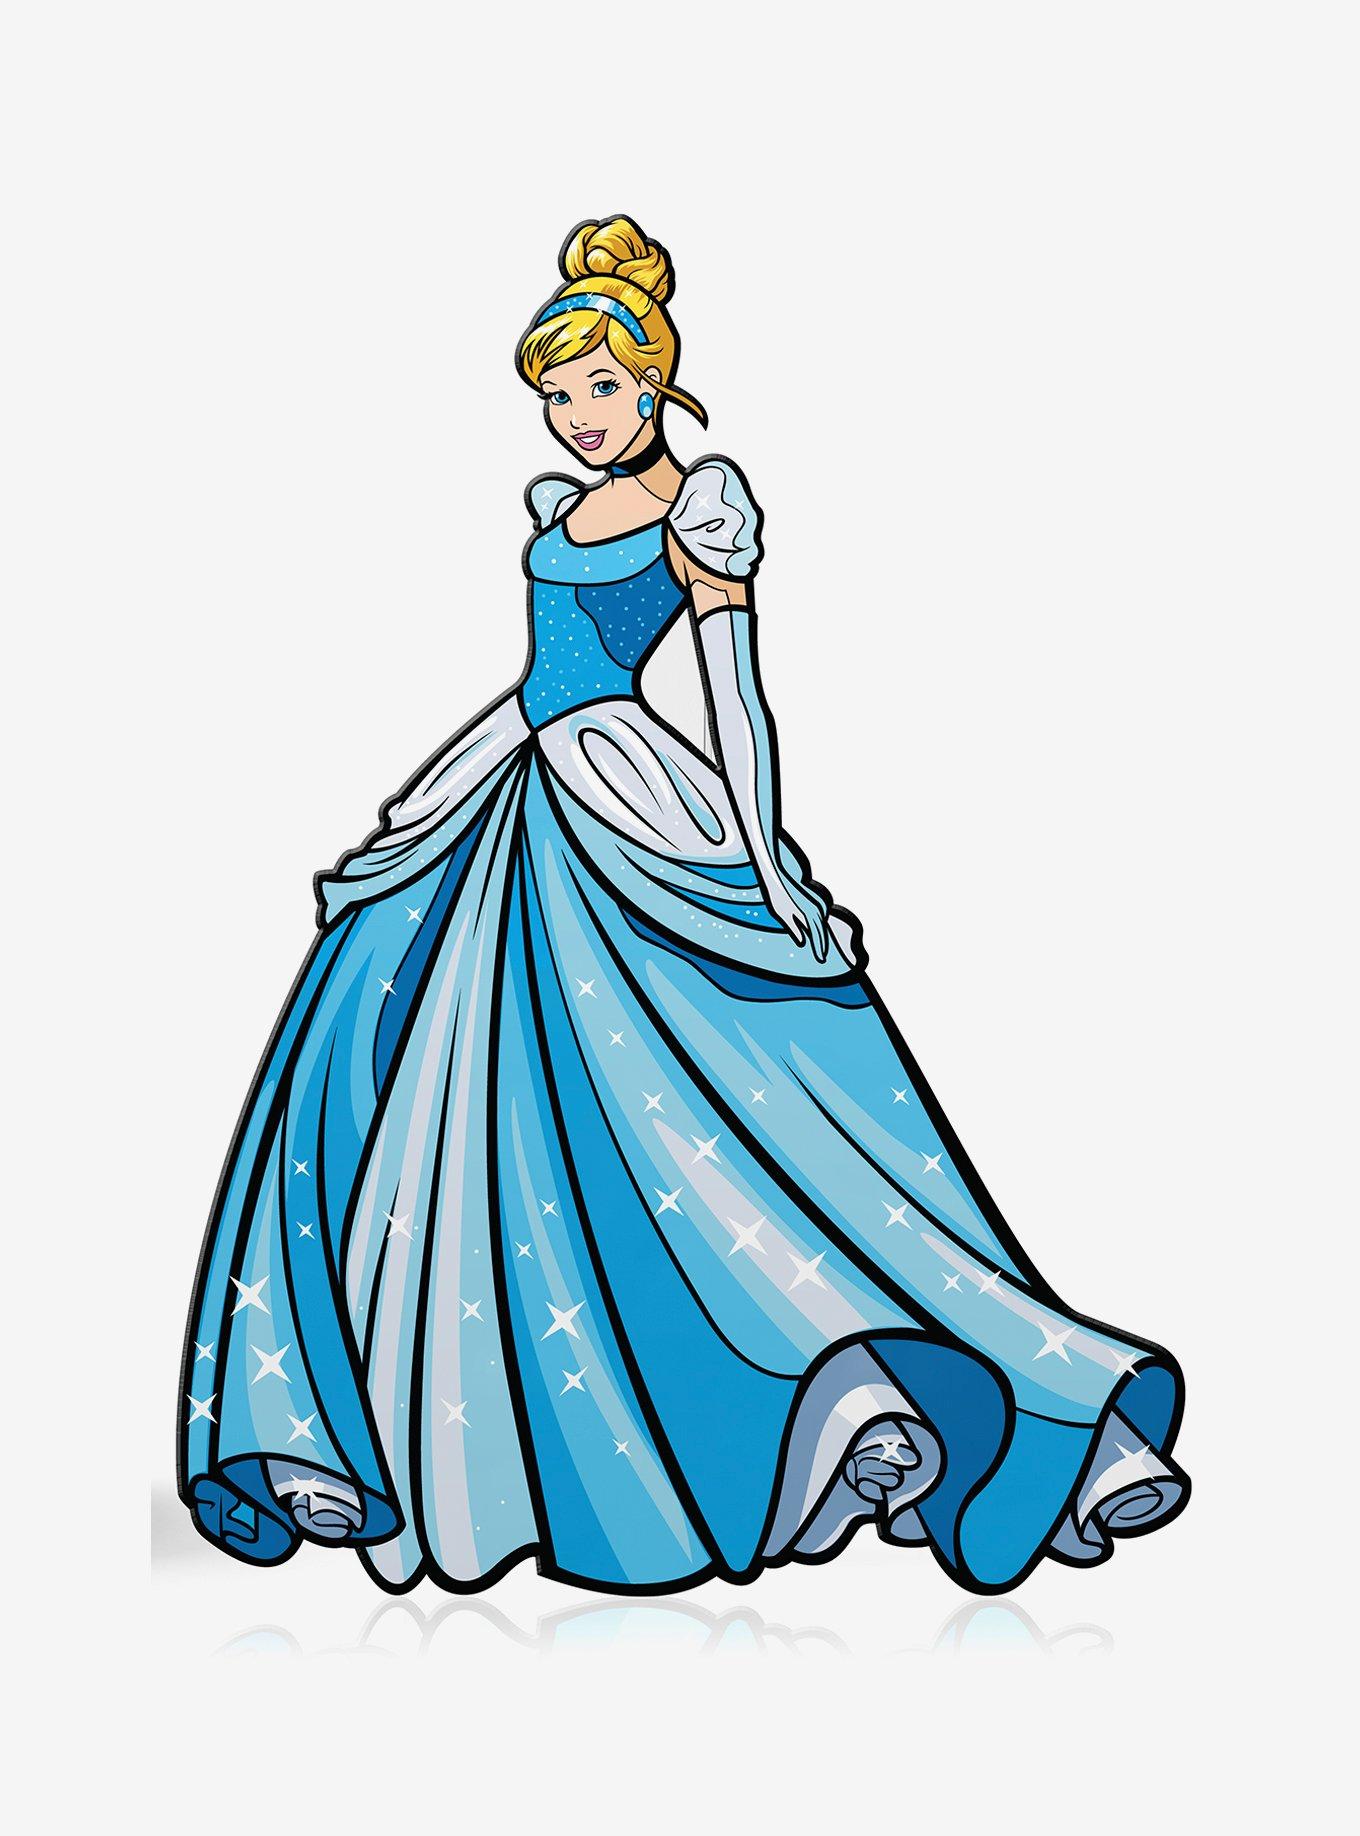 FiGPiN Disney Princess Cinderella Collectible Enamel Pin, , hi-res